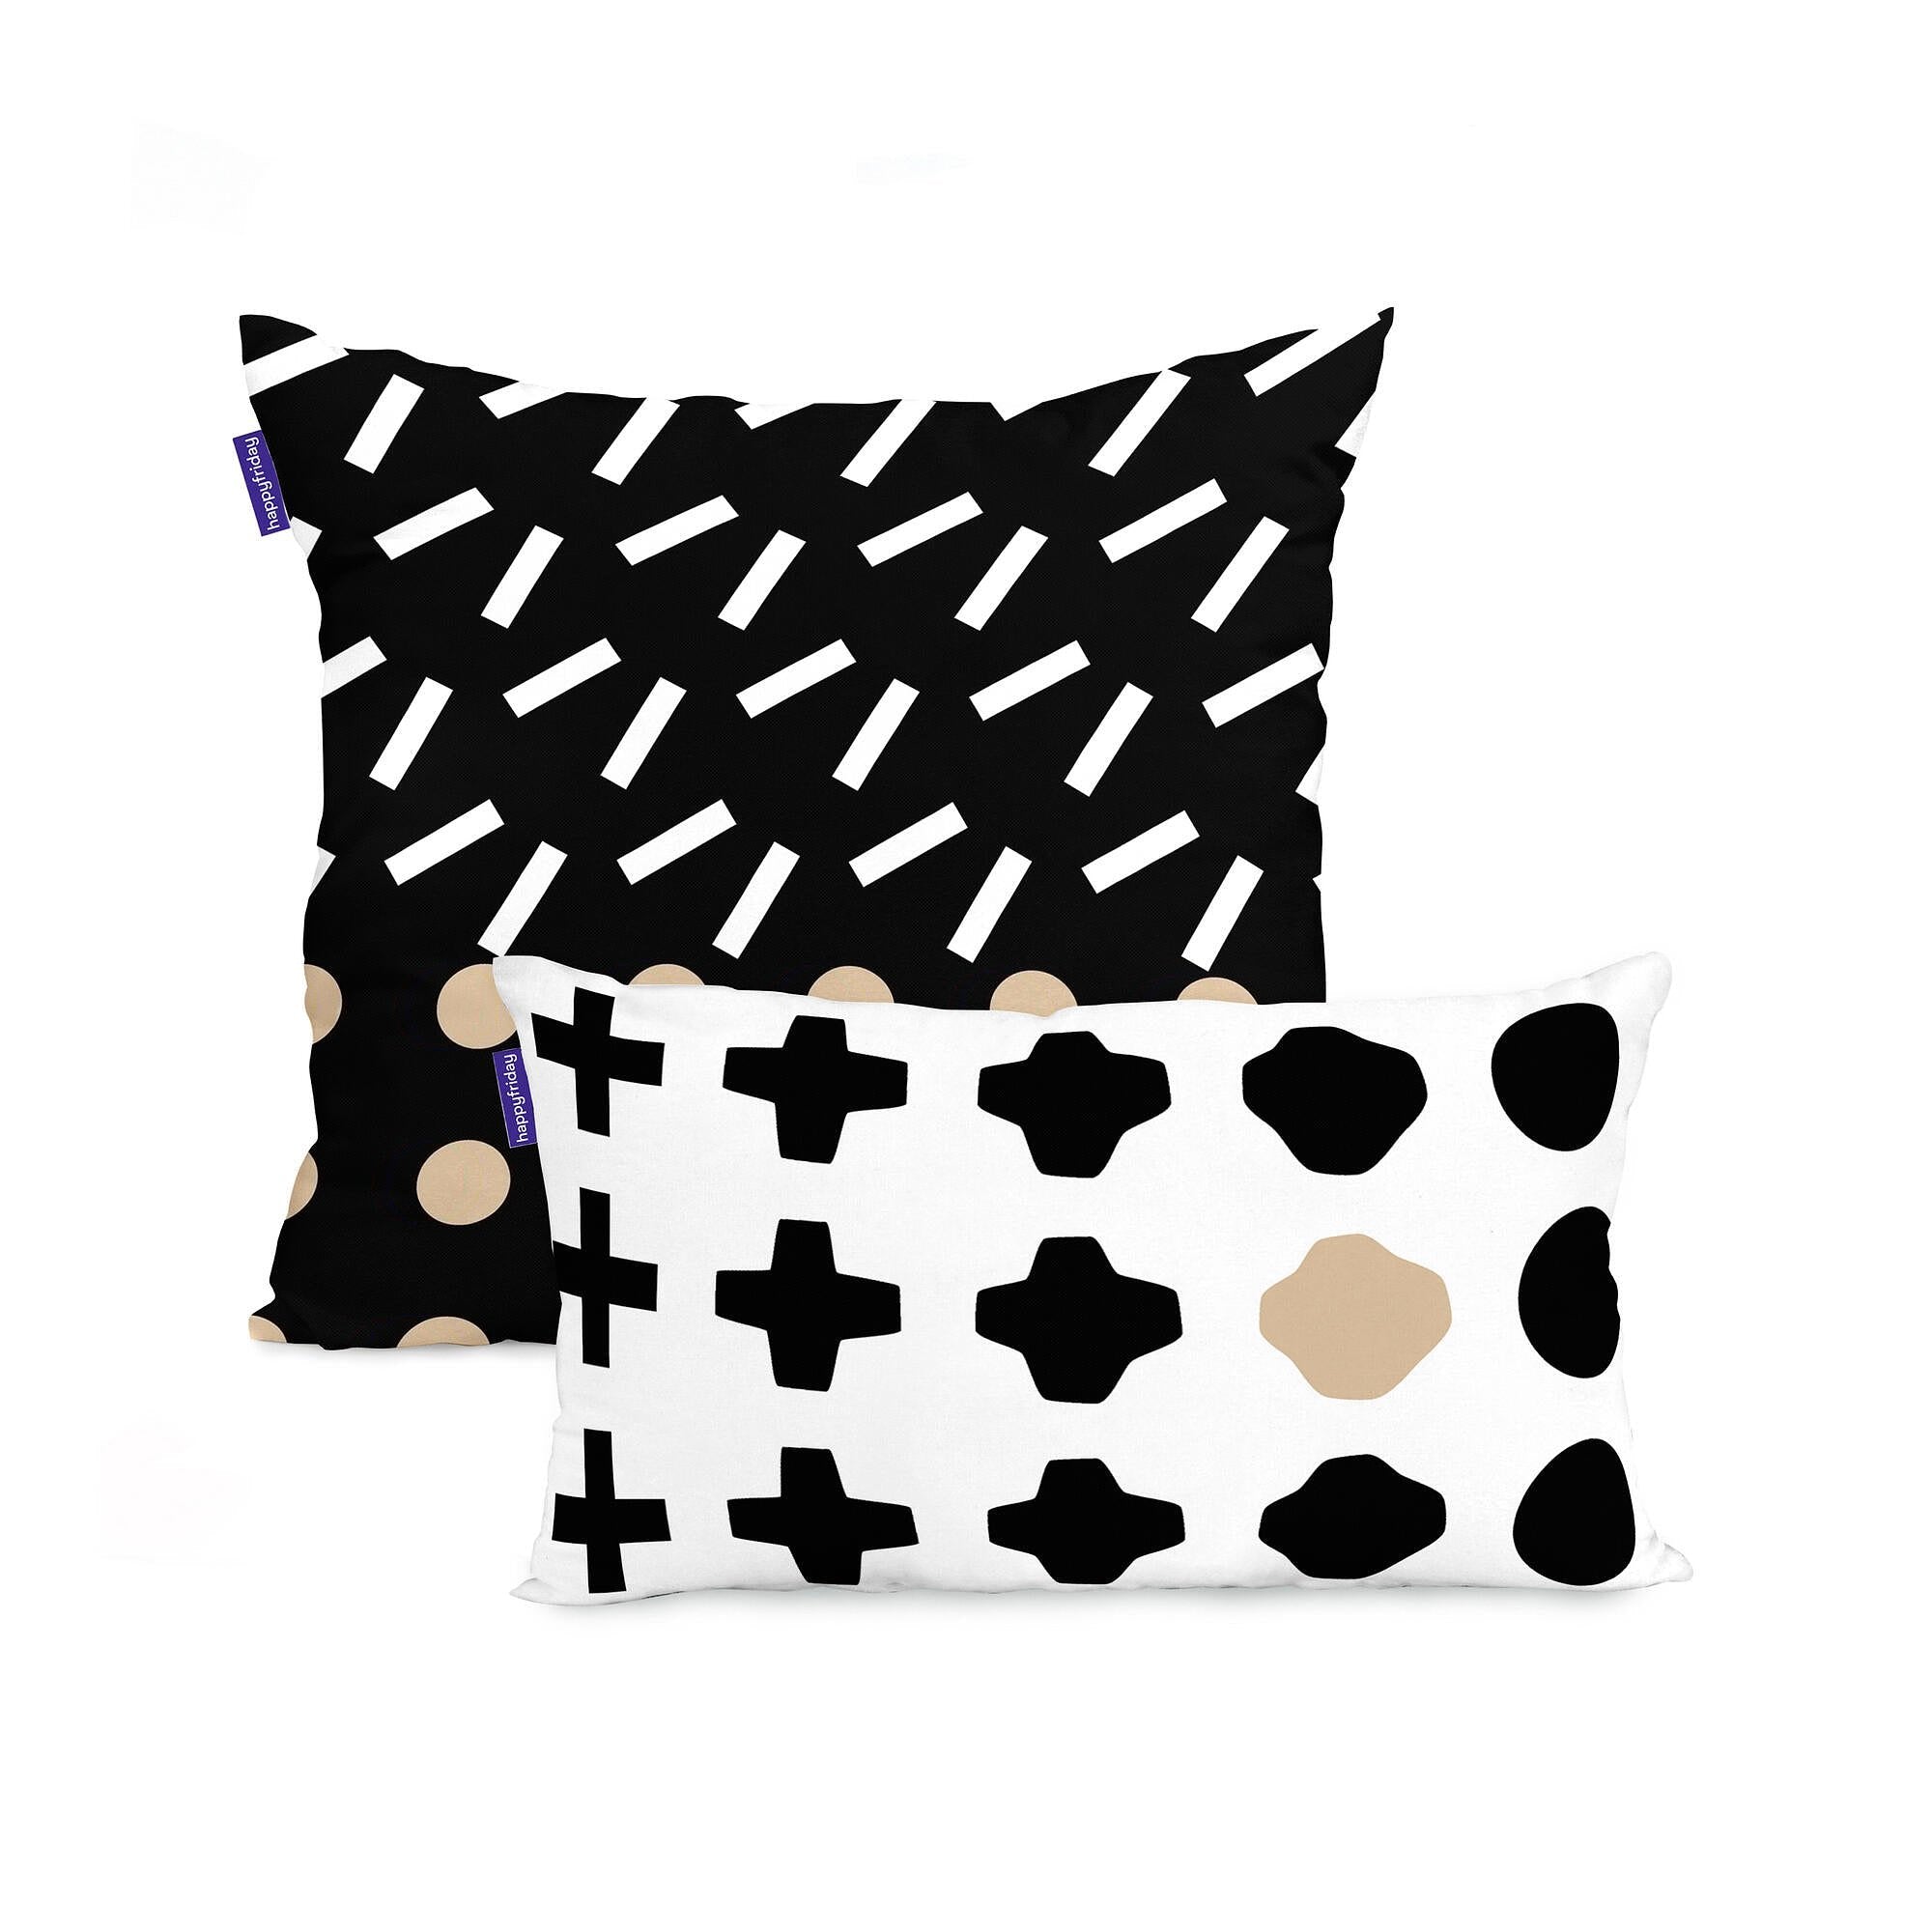 Happy Friday Cushion cover Blush sand 50x50 + 50x30 cm Multicolor